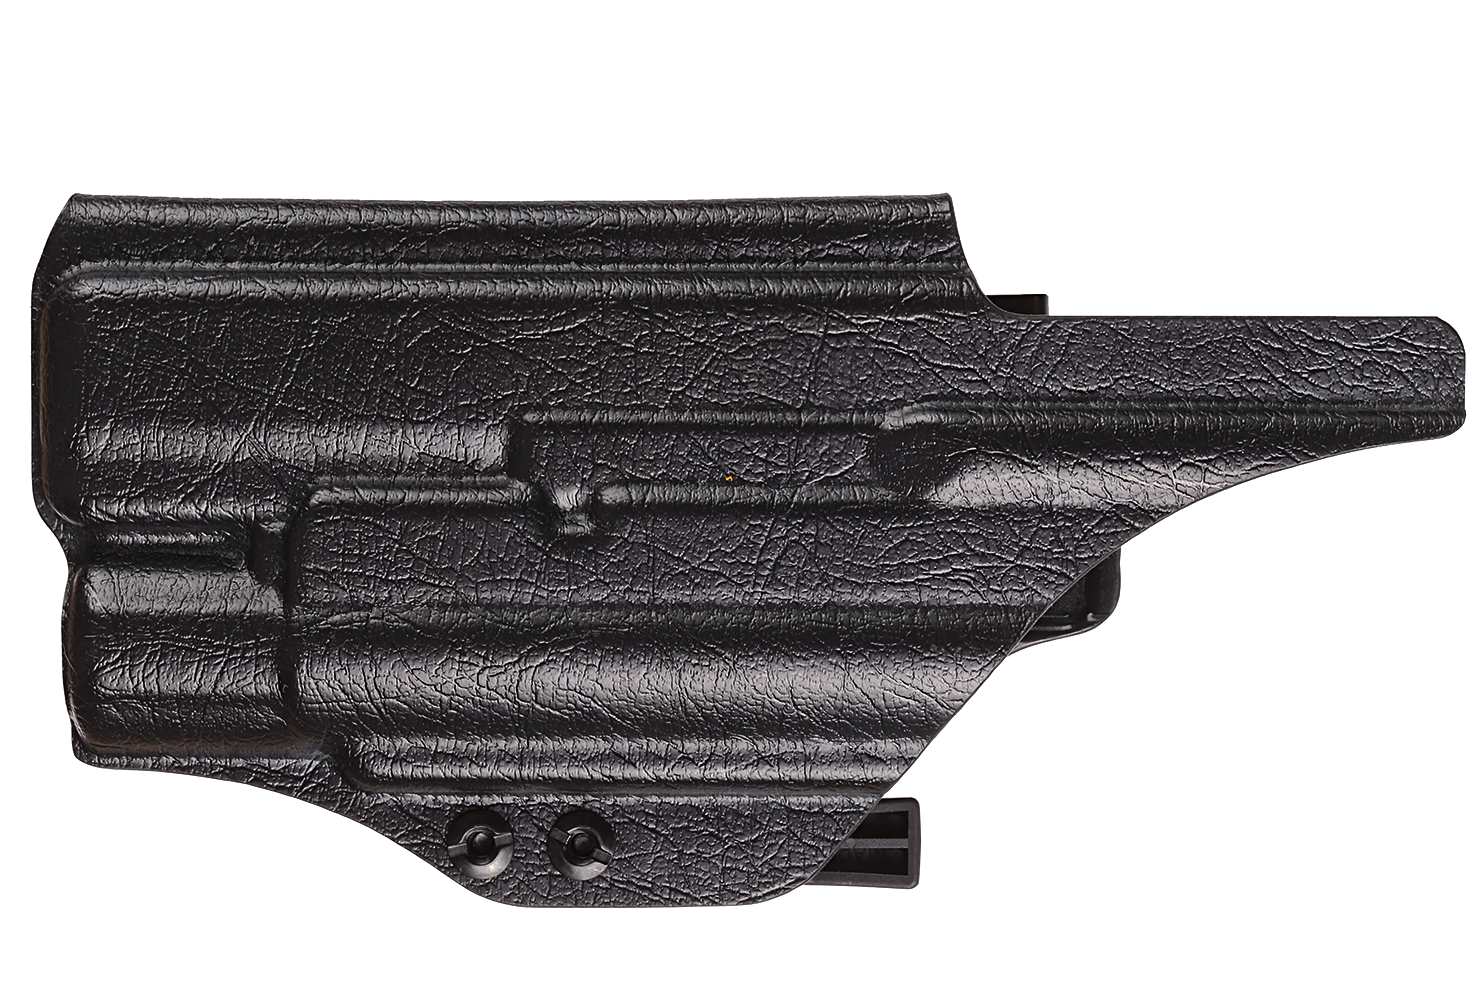 Rigel Glock AIWB Surefire X300 / XH35 Holster Kit